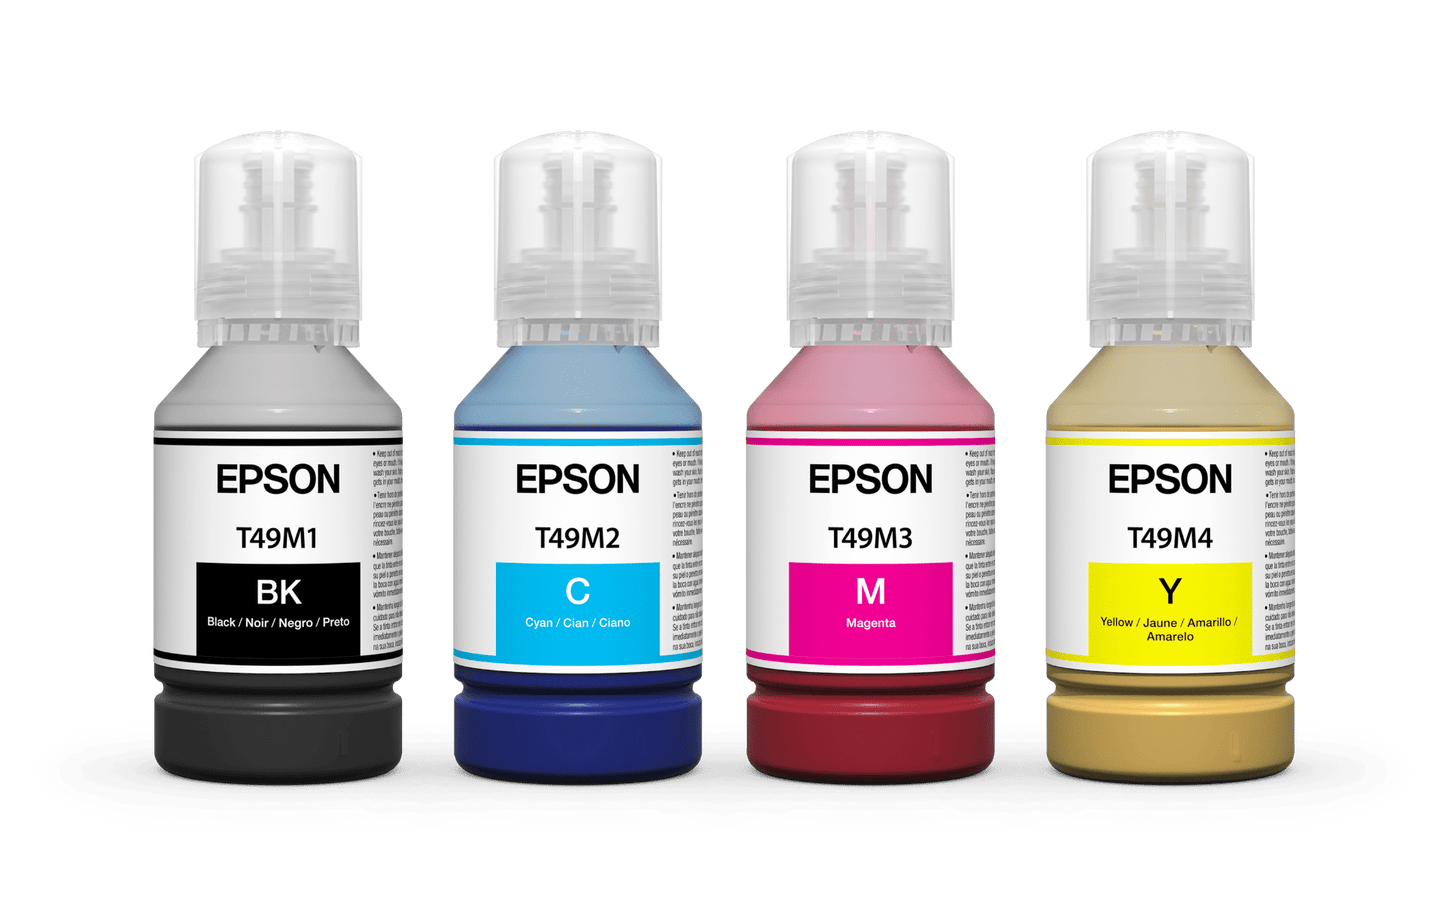 Epson Sublimation F570 Printer